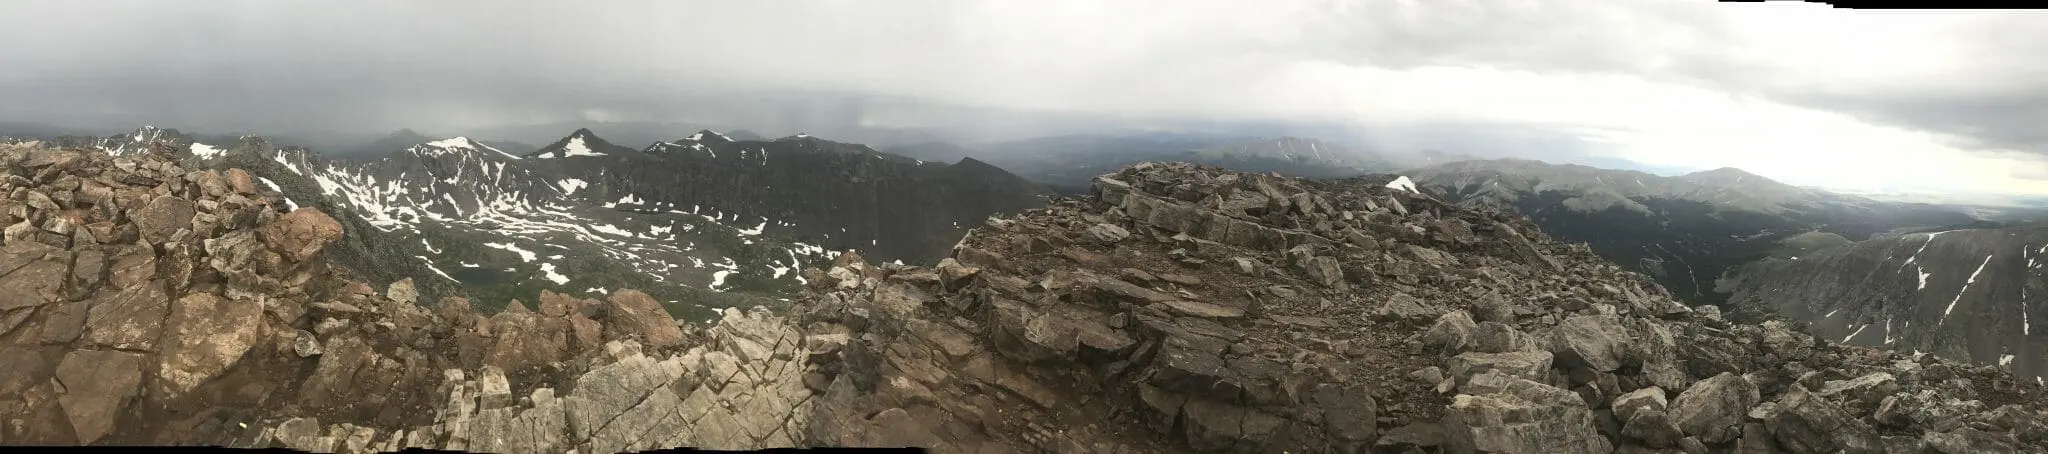 Quandary Peak Panorama view